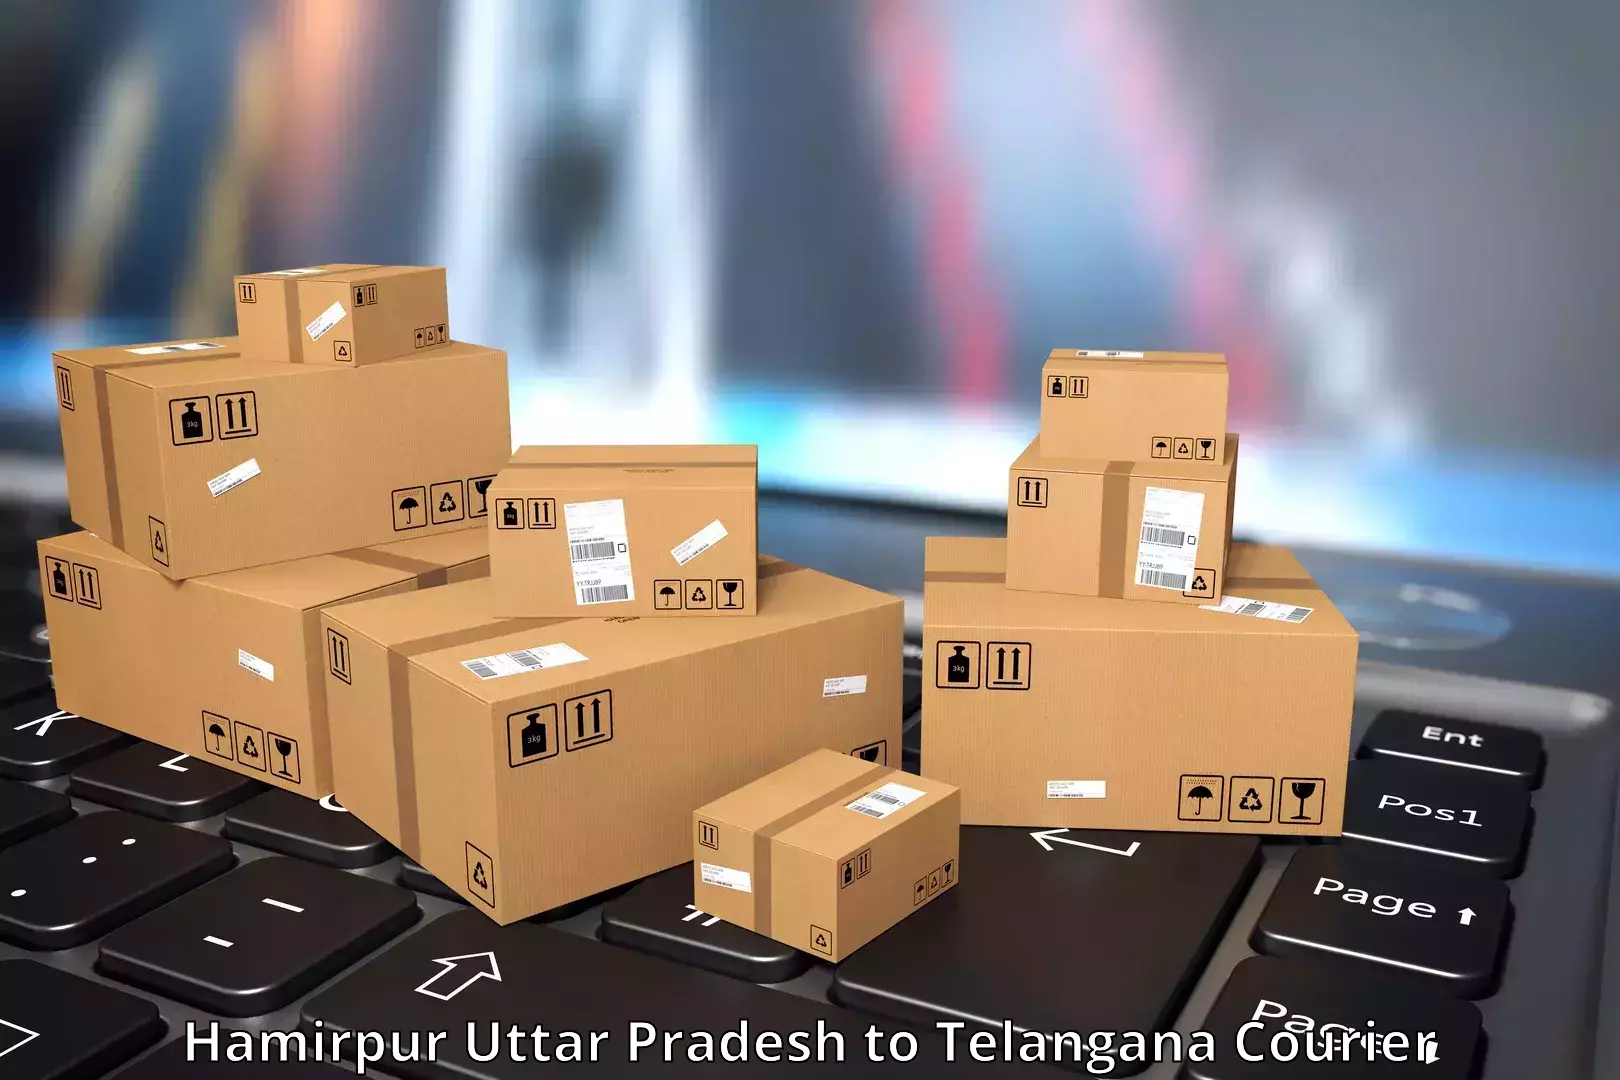 Reliable package handling Hamirpur Uttar Pradesh to Rudrangi